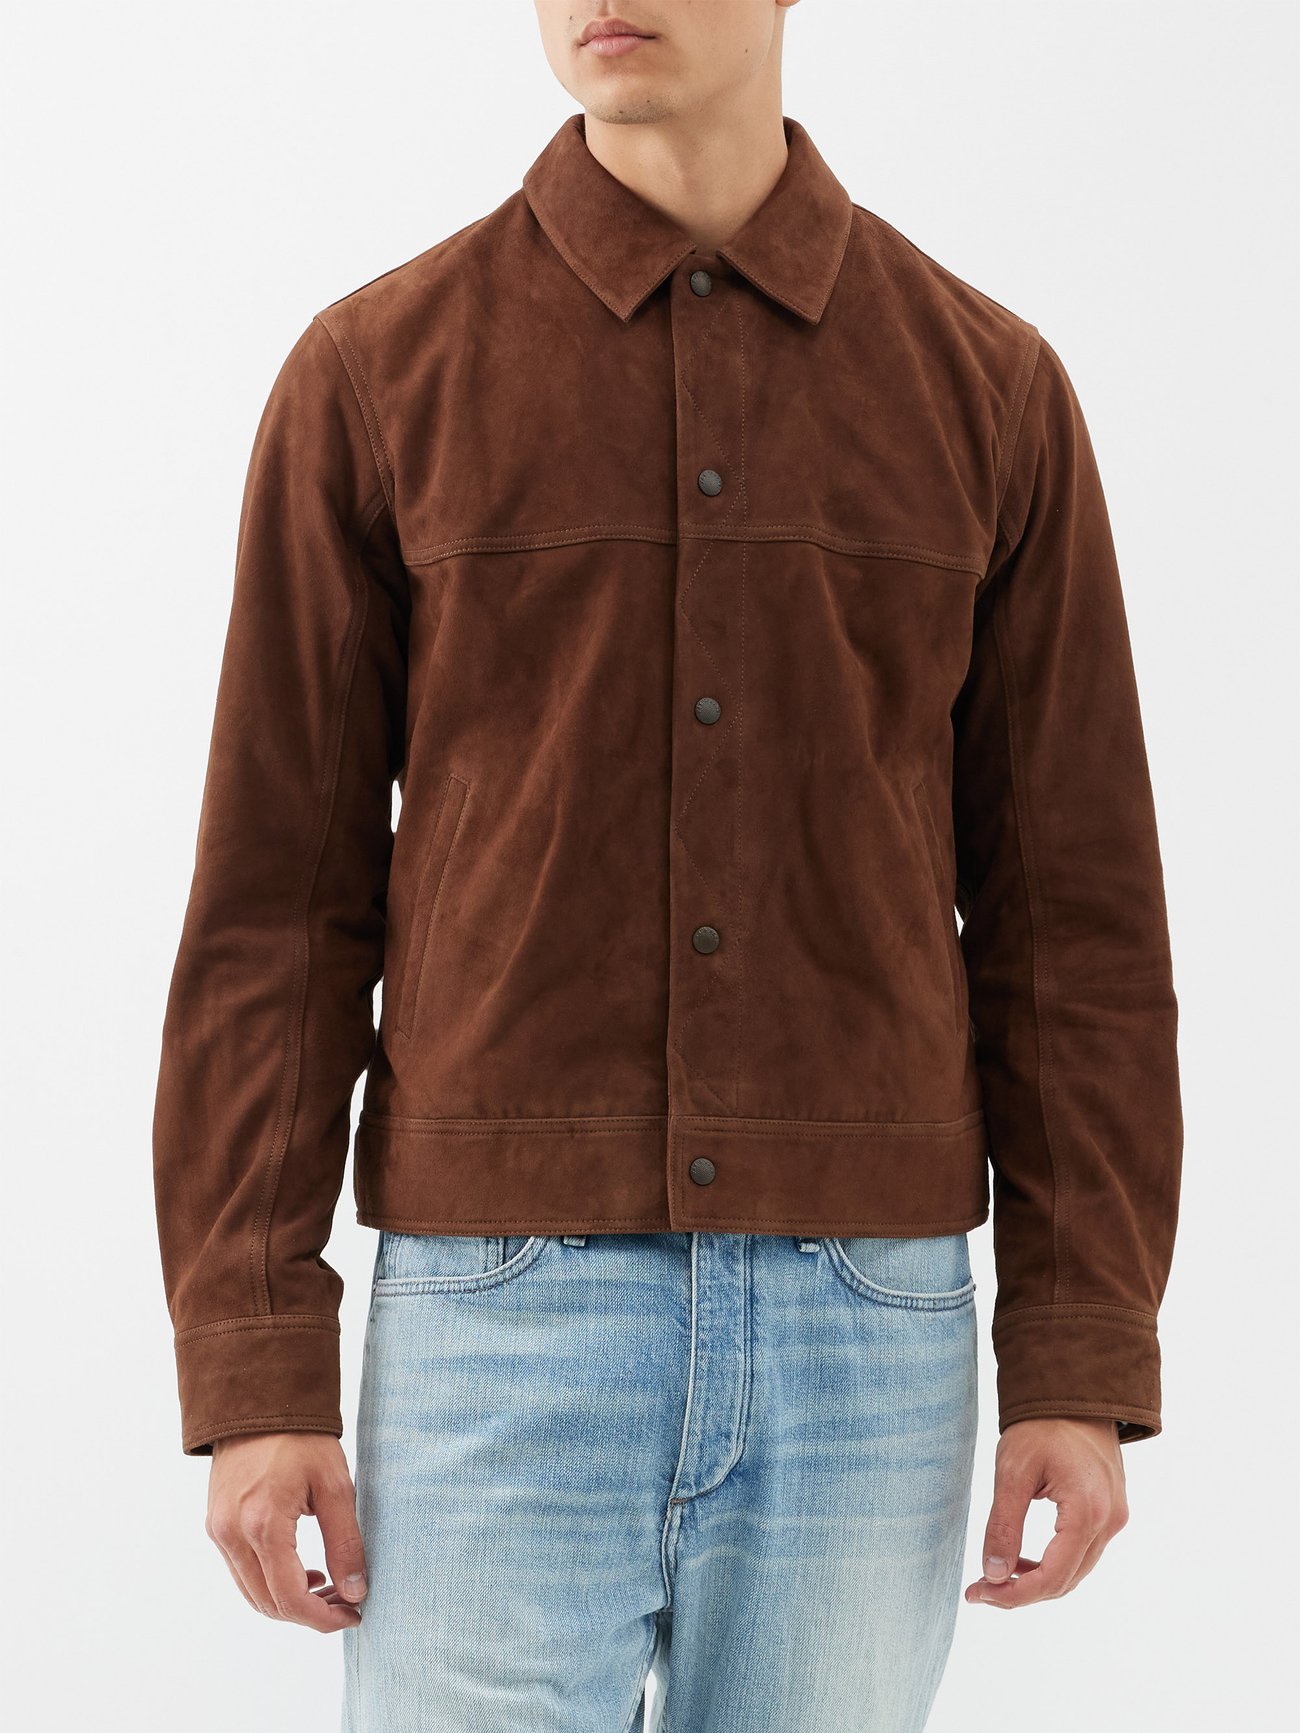 Rag & Bone, denim jacket with leather sleeves - Unique Designer Pieces